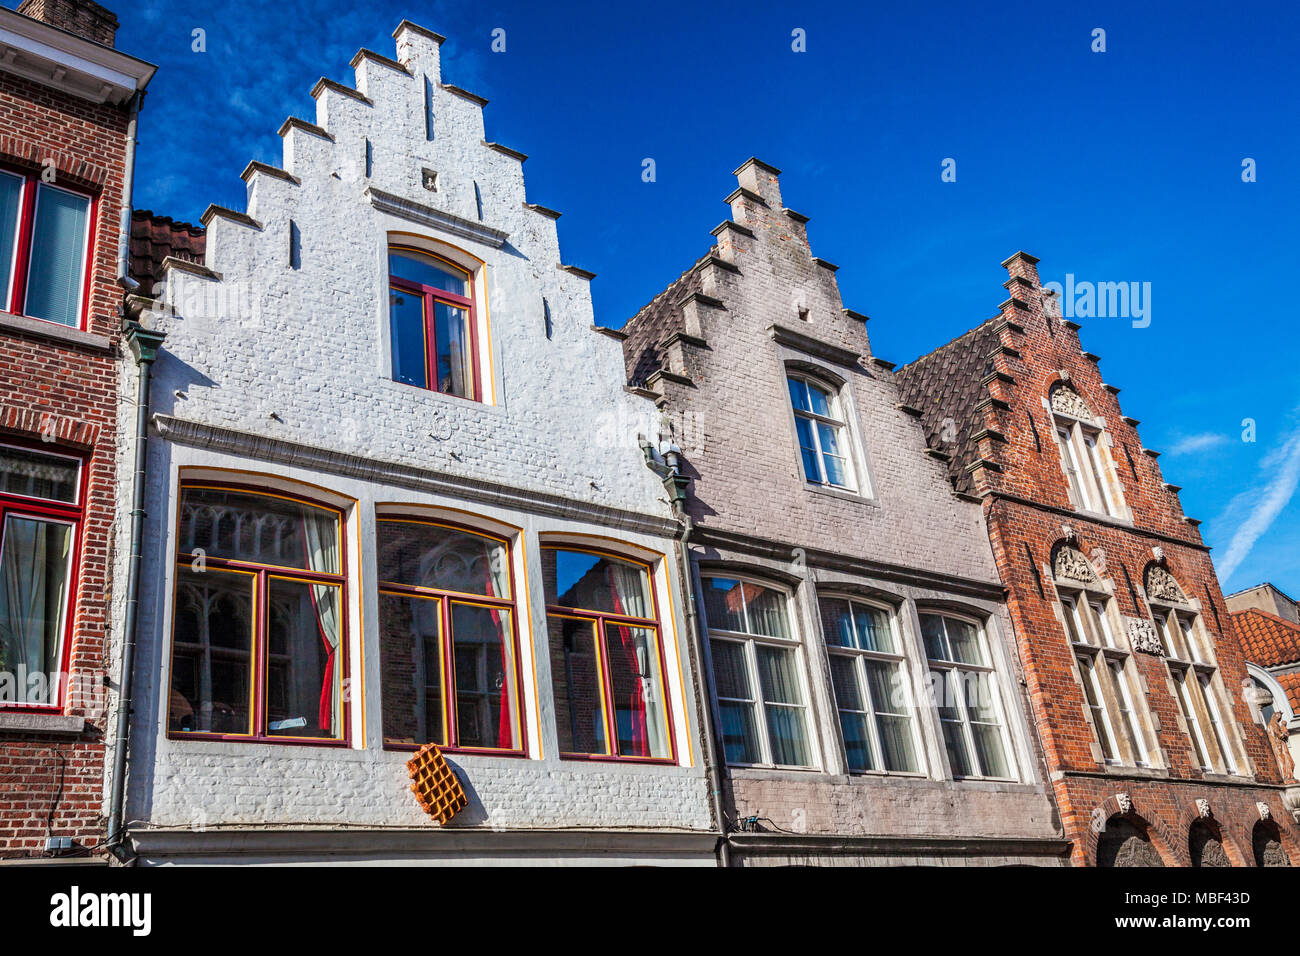 Storiche case patrizie lungo il Langerei in Bruges (Brugge), Belgio. Foto Stock